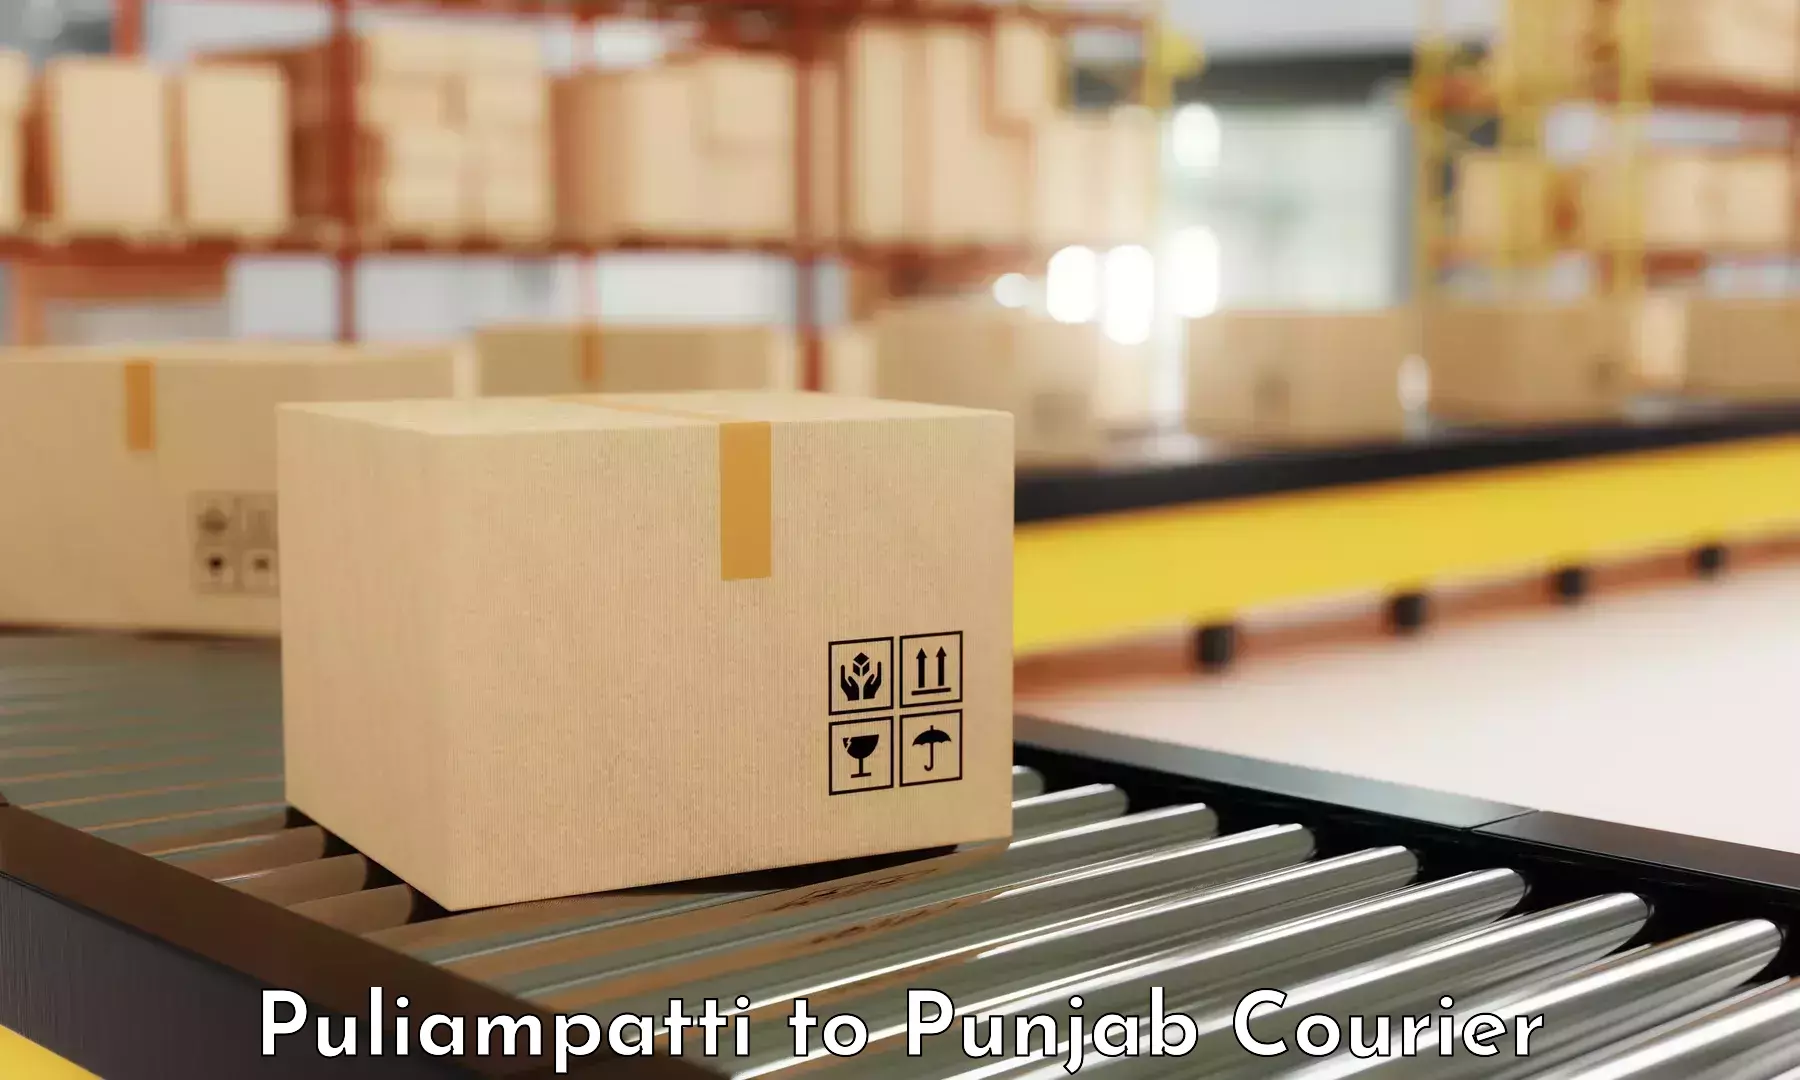 International parcel service Puliampatti to Malout